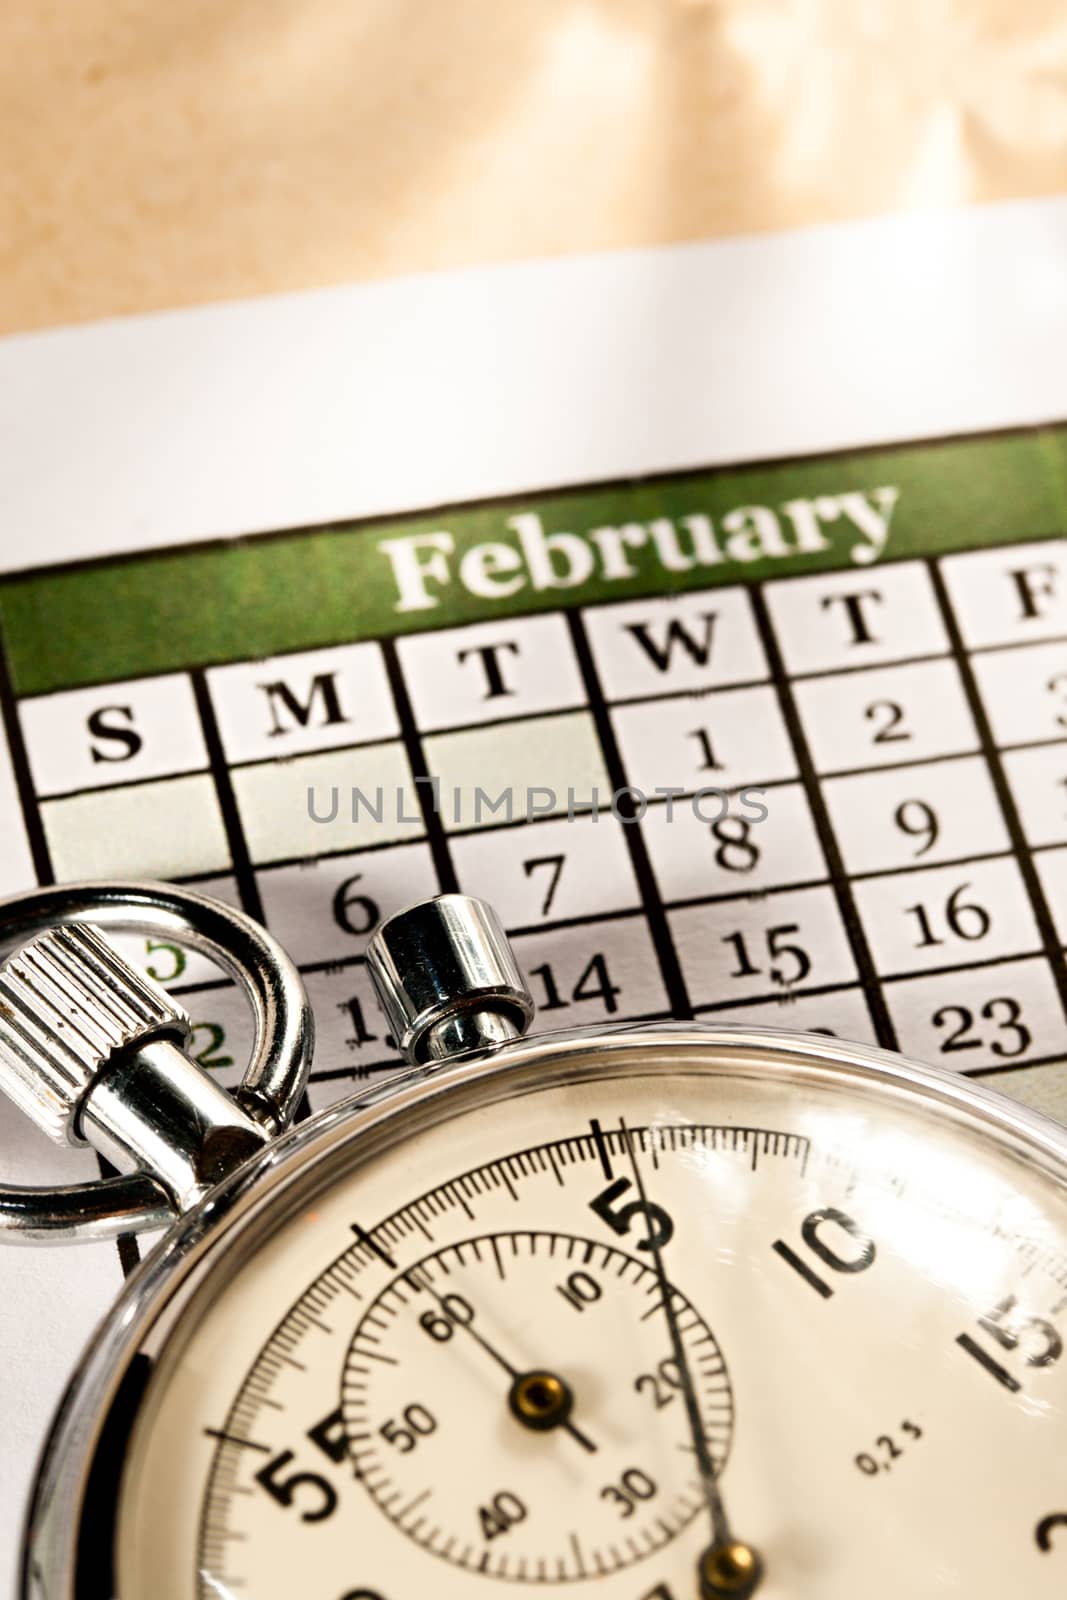 Monthly calendar and stopwatch by Garsya